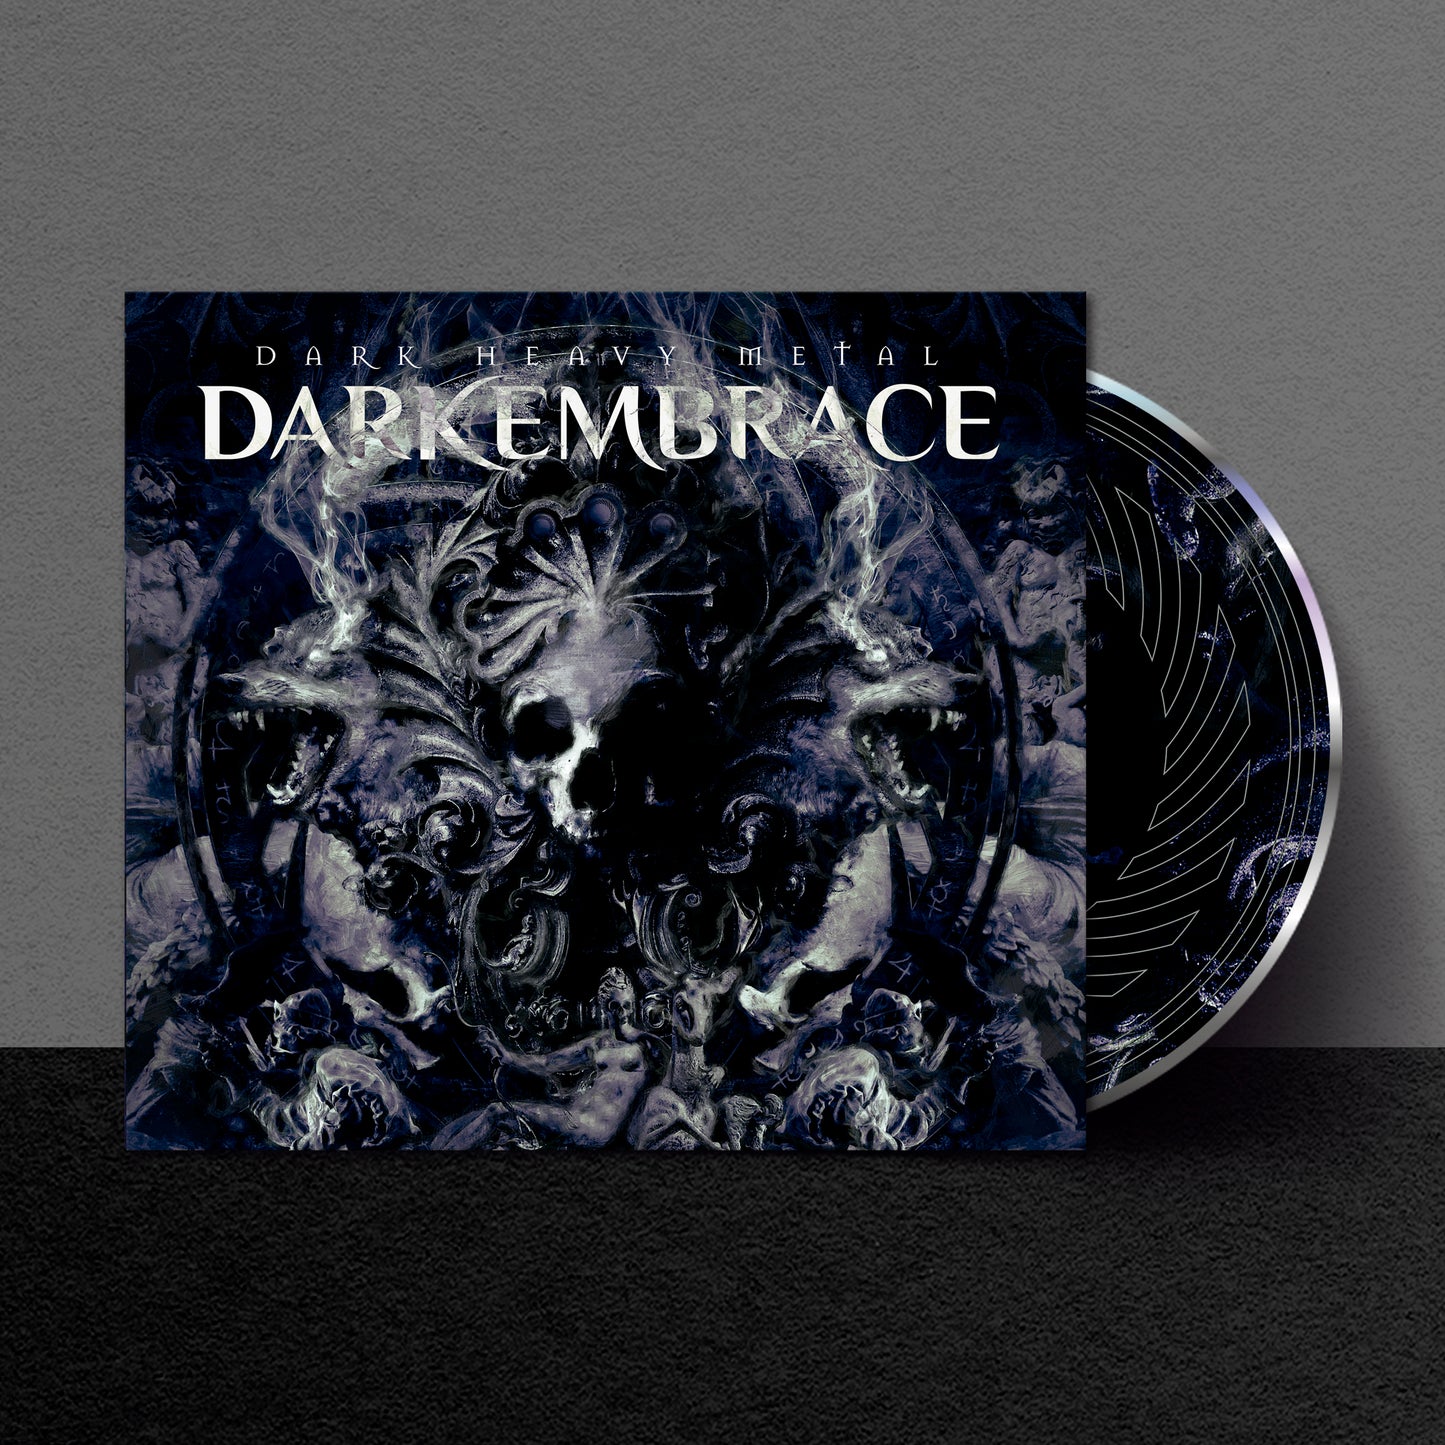 CD-Digipack Dark Heavy Metal